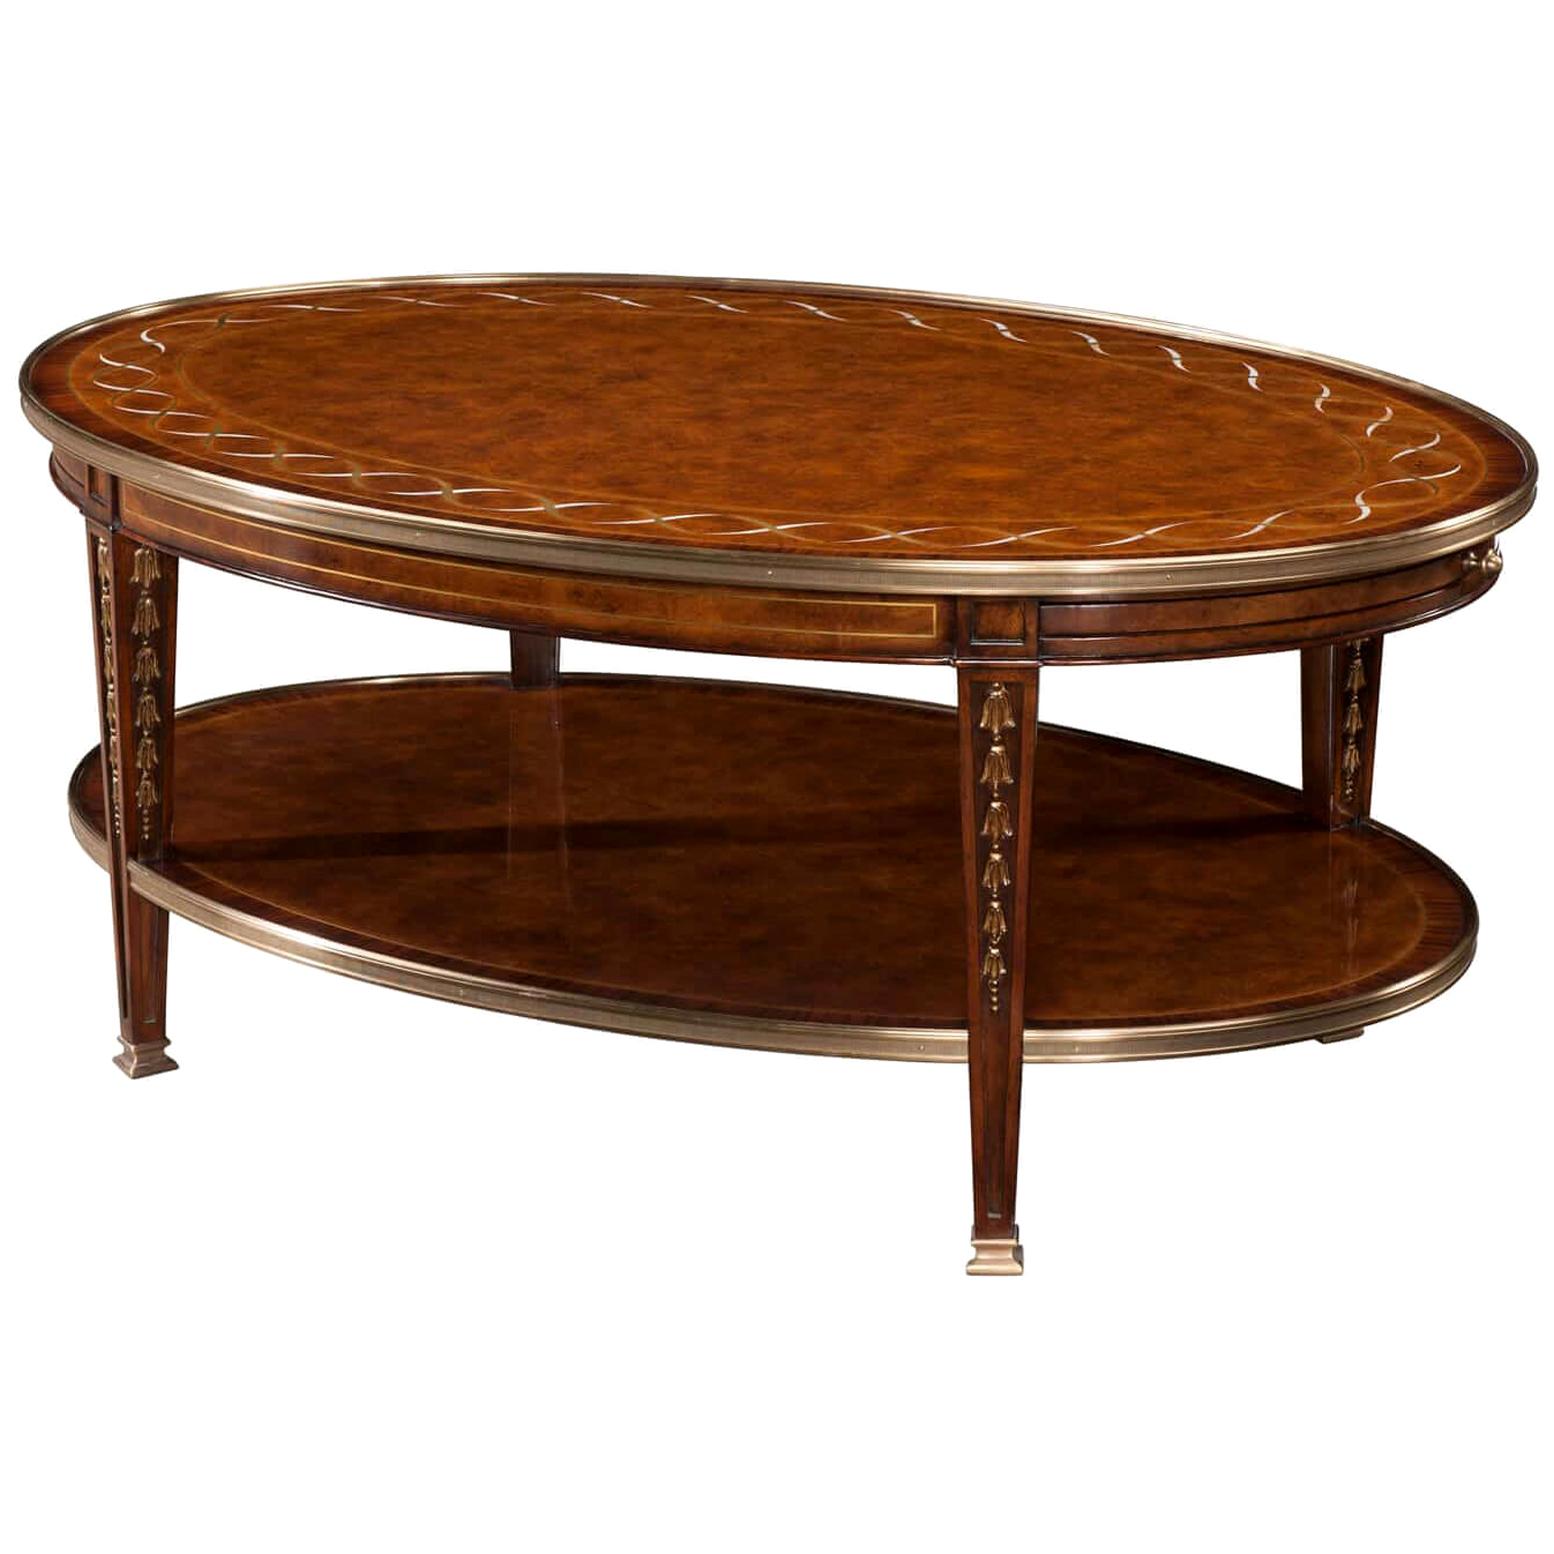 George II Style Oval Coffee Table